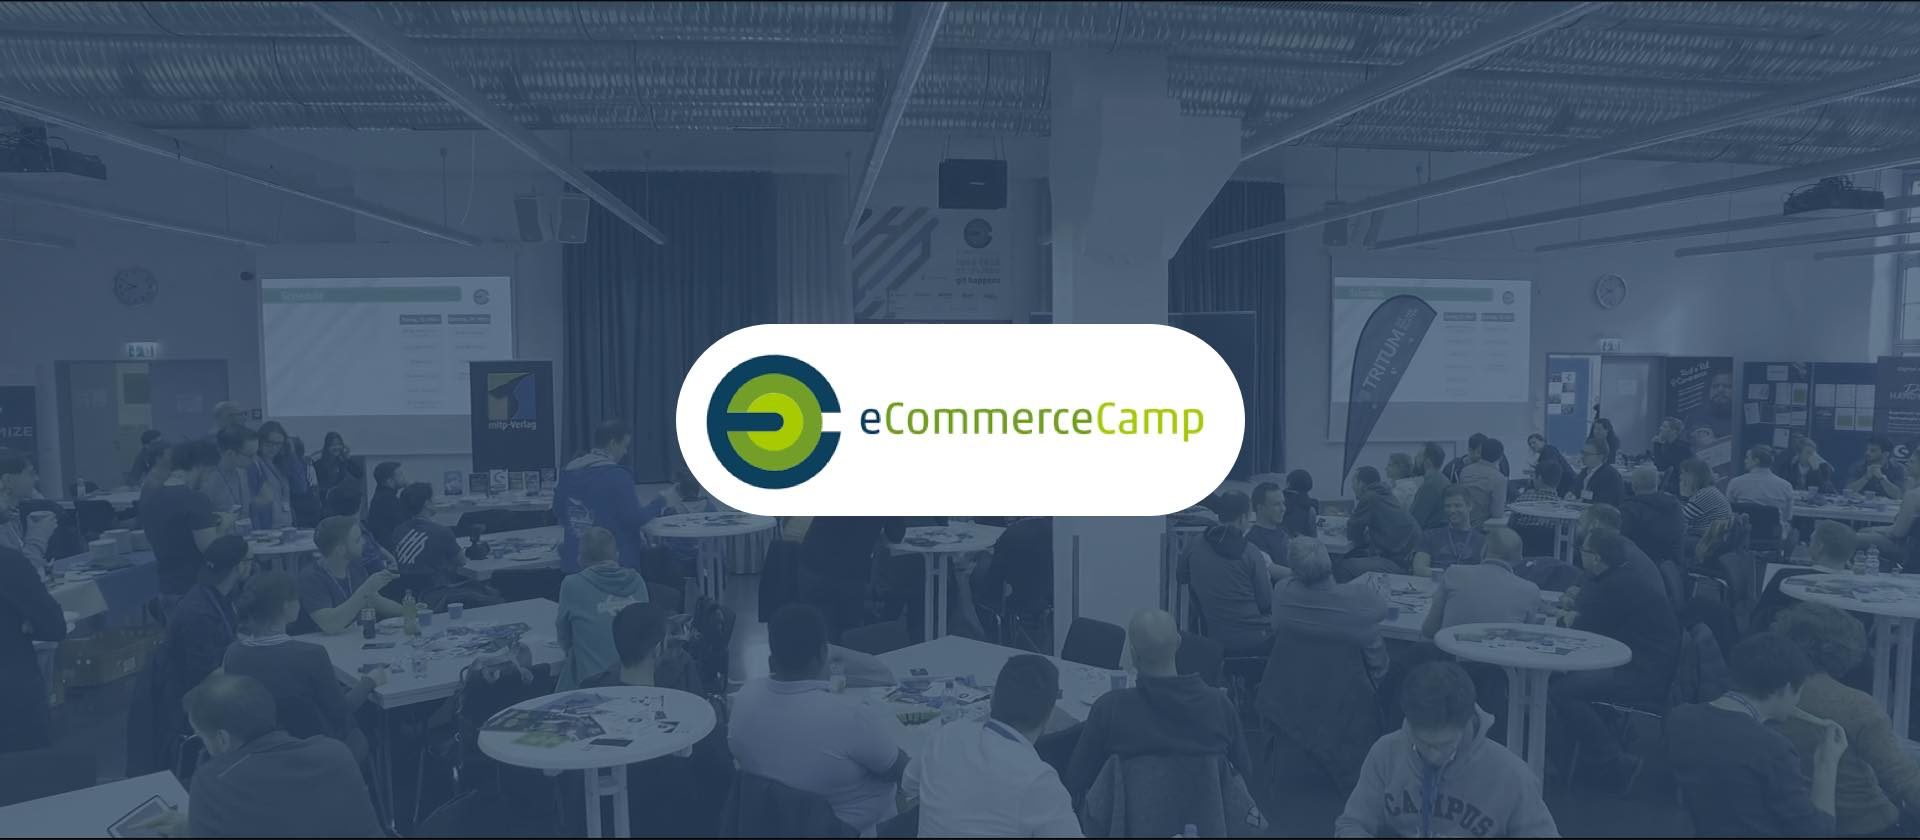 eCommerceCamp 2019: Ecommerce and Digitalization